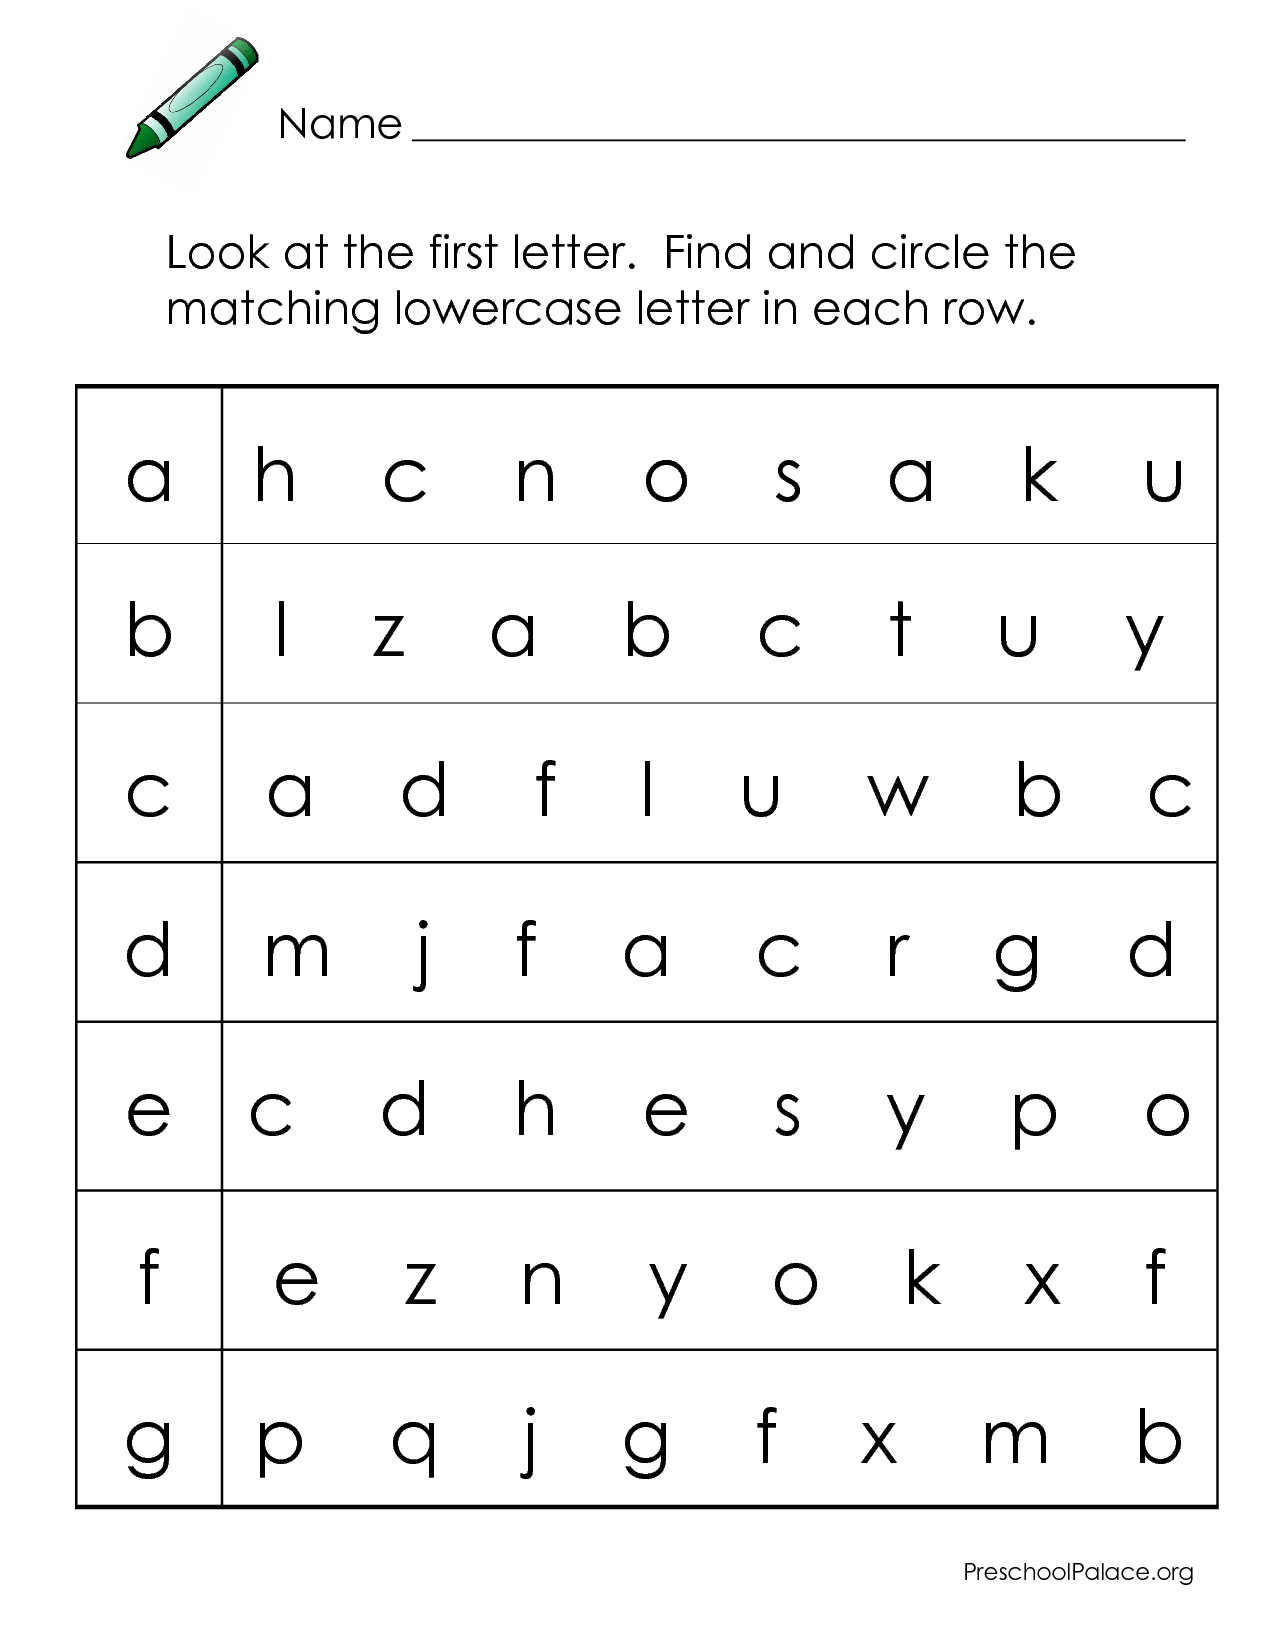 Alphabet Worksheets For Preschoolers | Abcs - Letter with Alphabet Matching Worksheets For Nursery